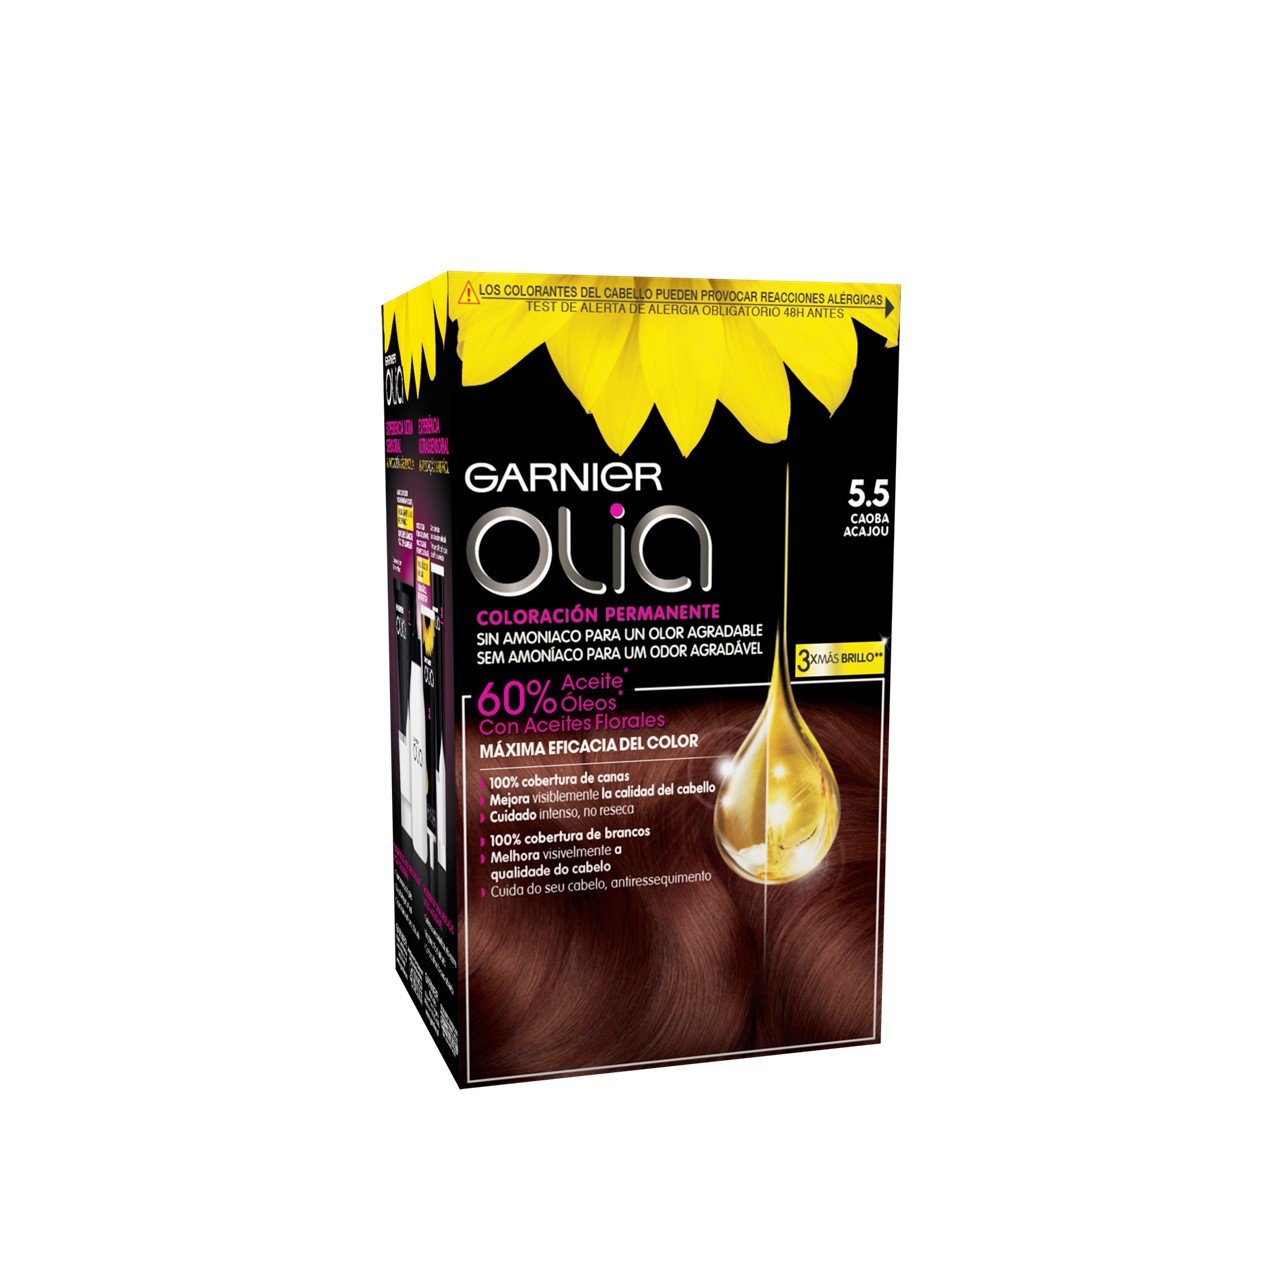 Garnier Olia 5.5 Permanent Hair Dye